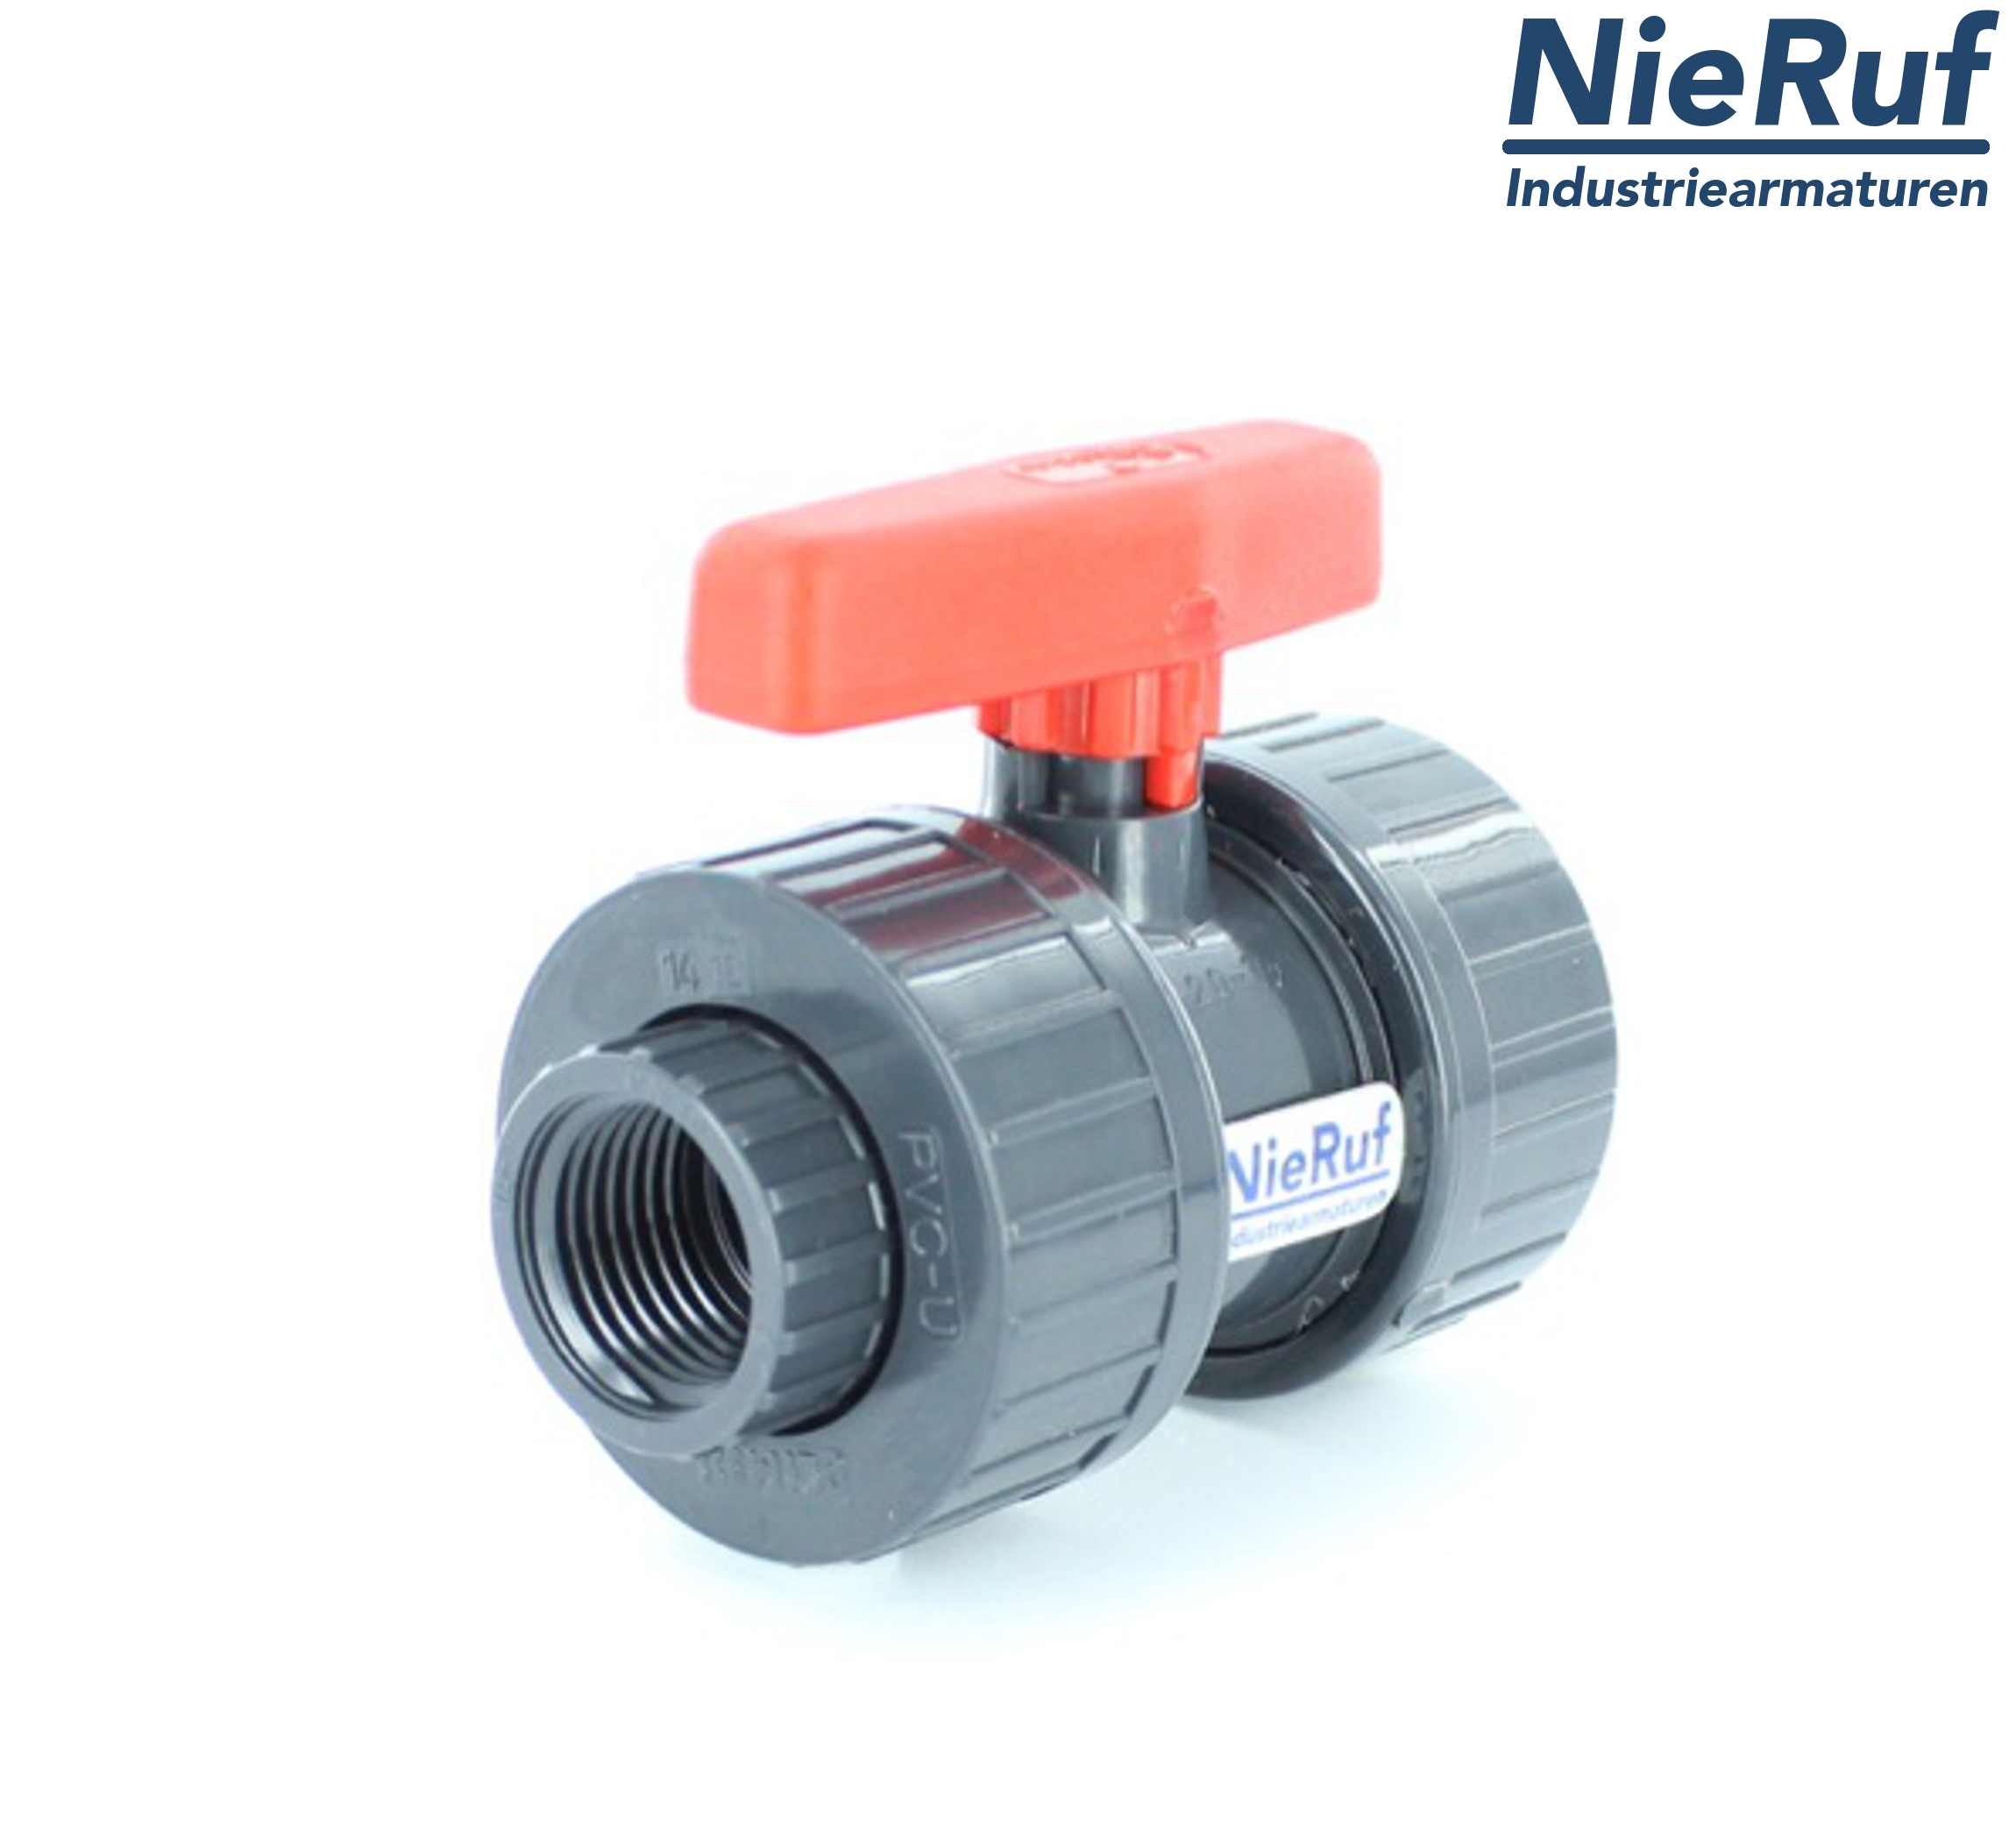 PVC-ball valve DN65 - 2 1/2" inch KK02 Hytrel/EPDM